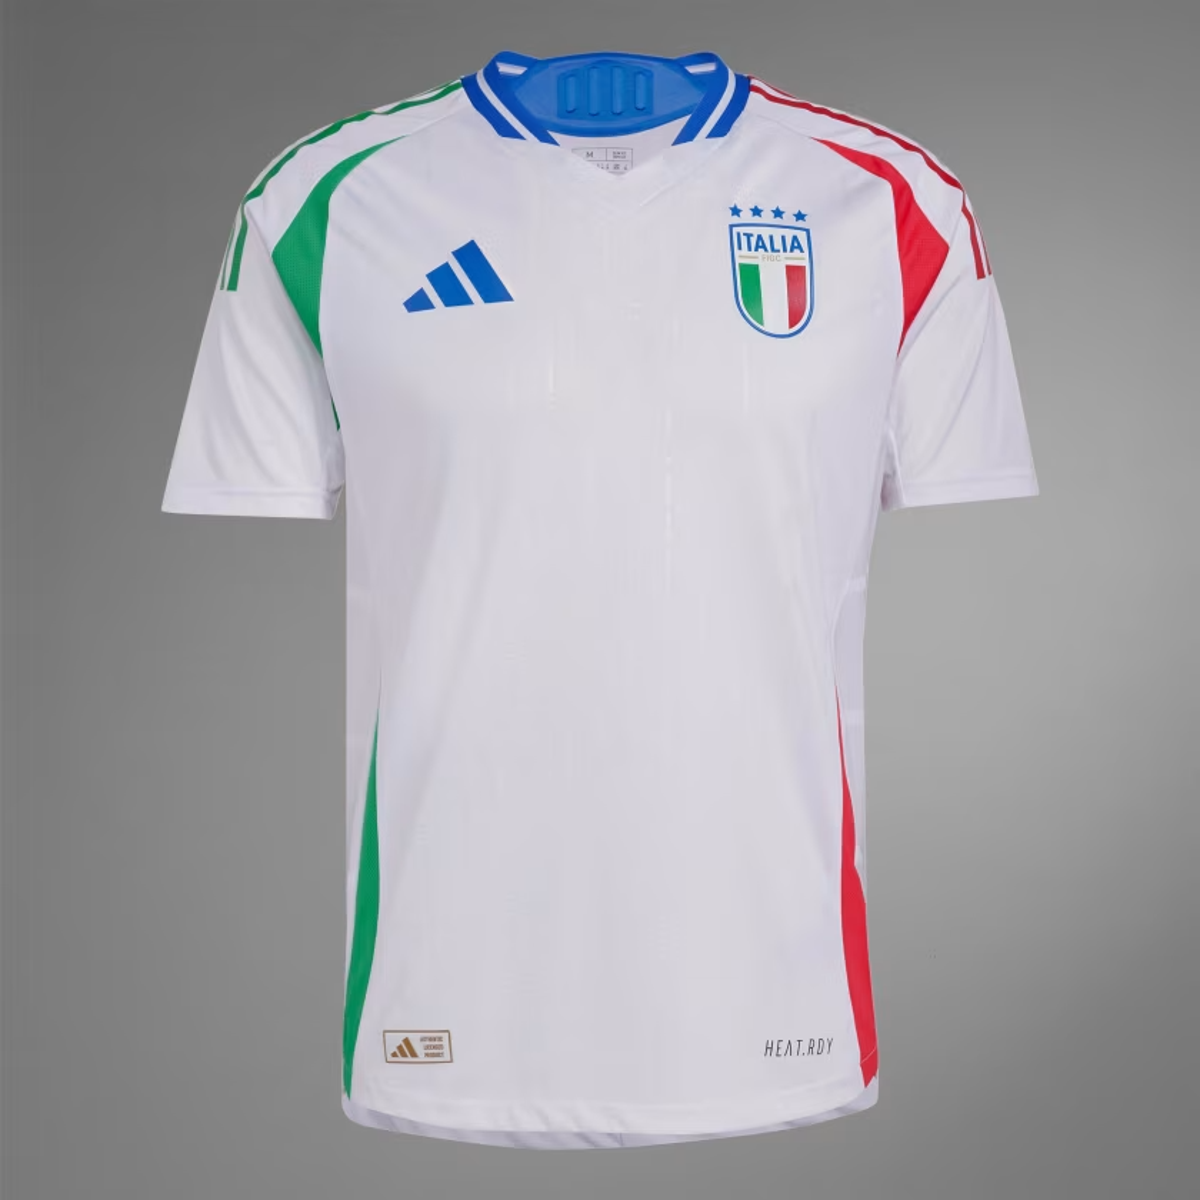 Italy away (adidas)